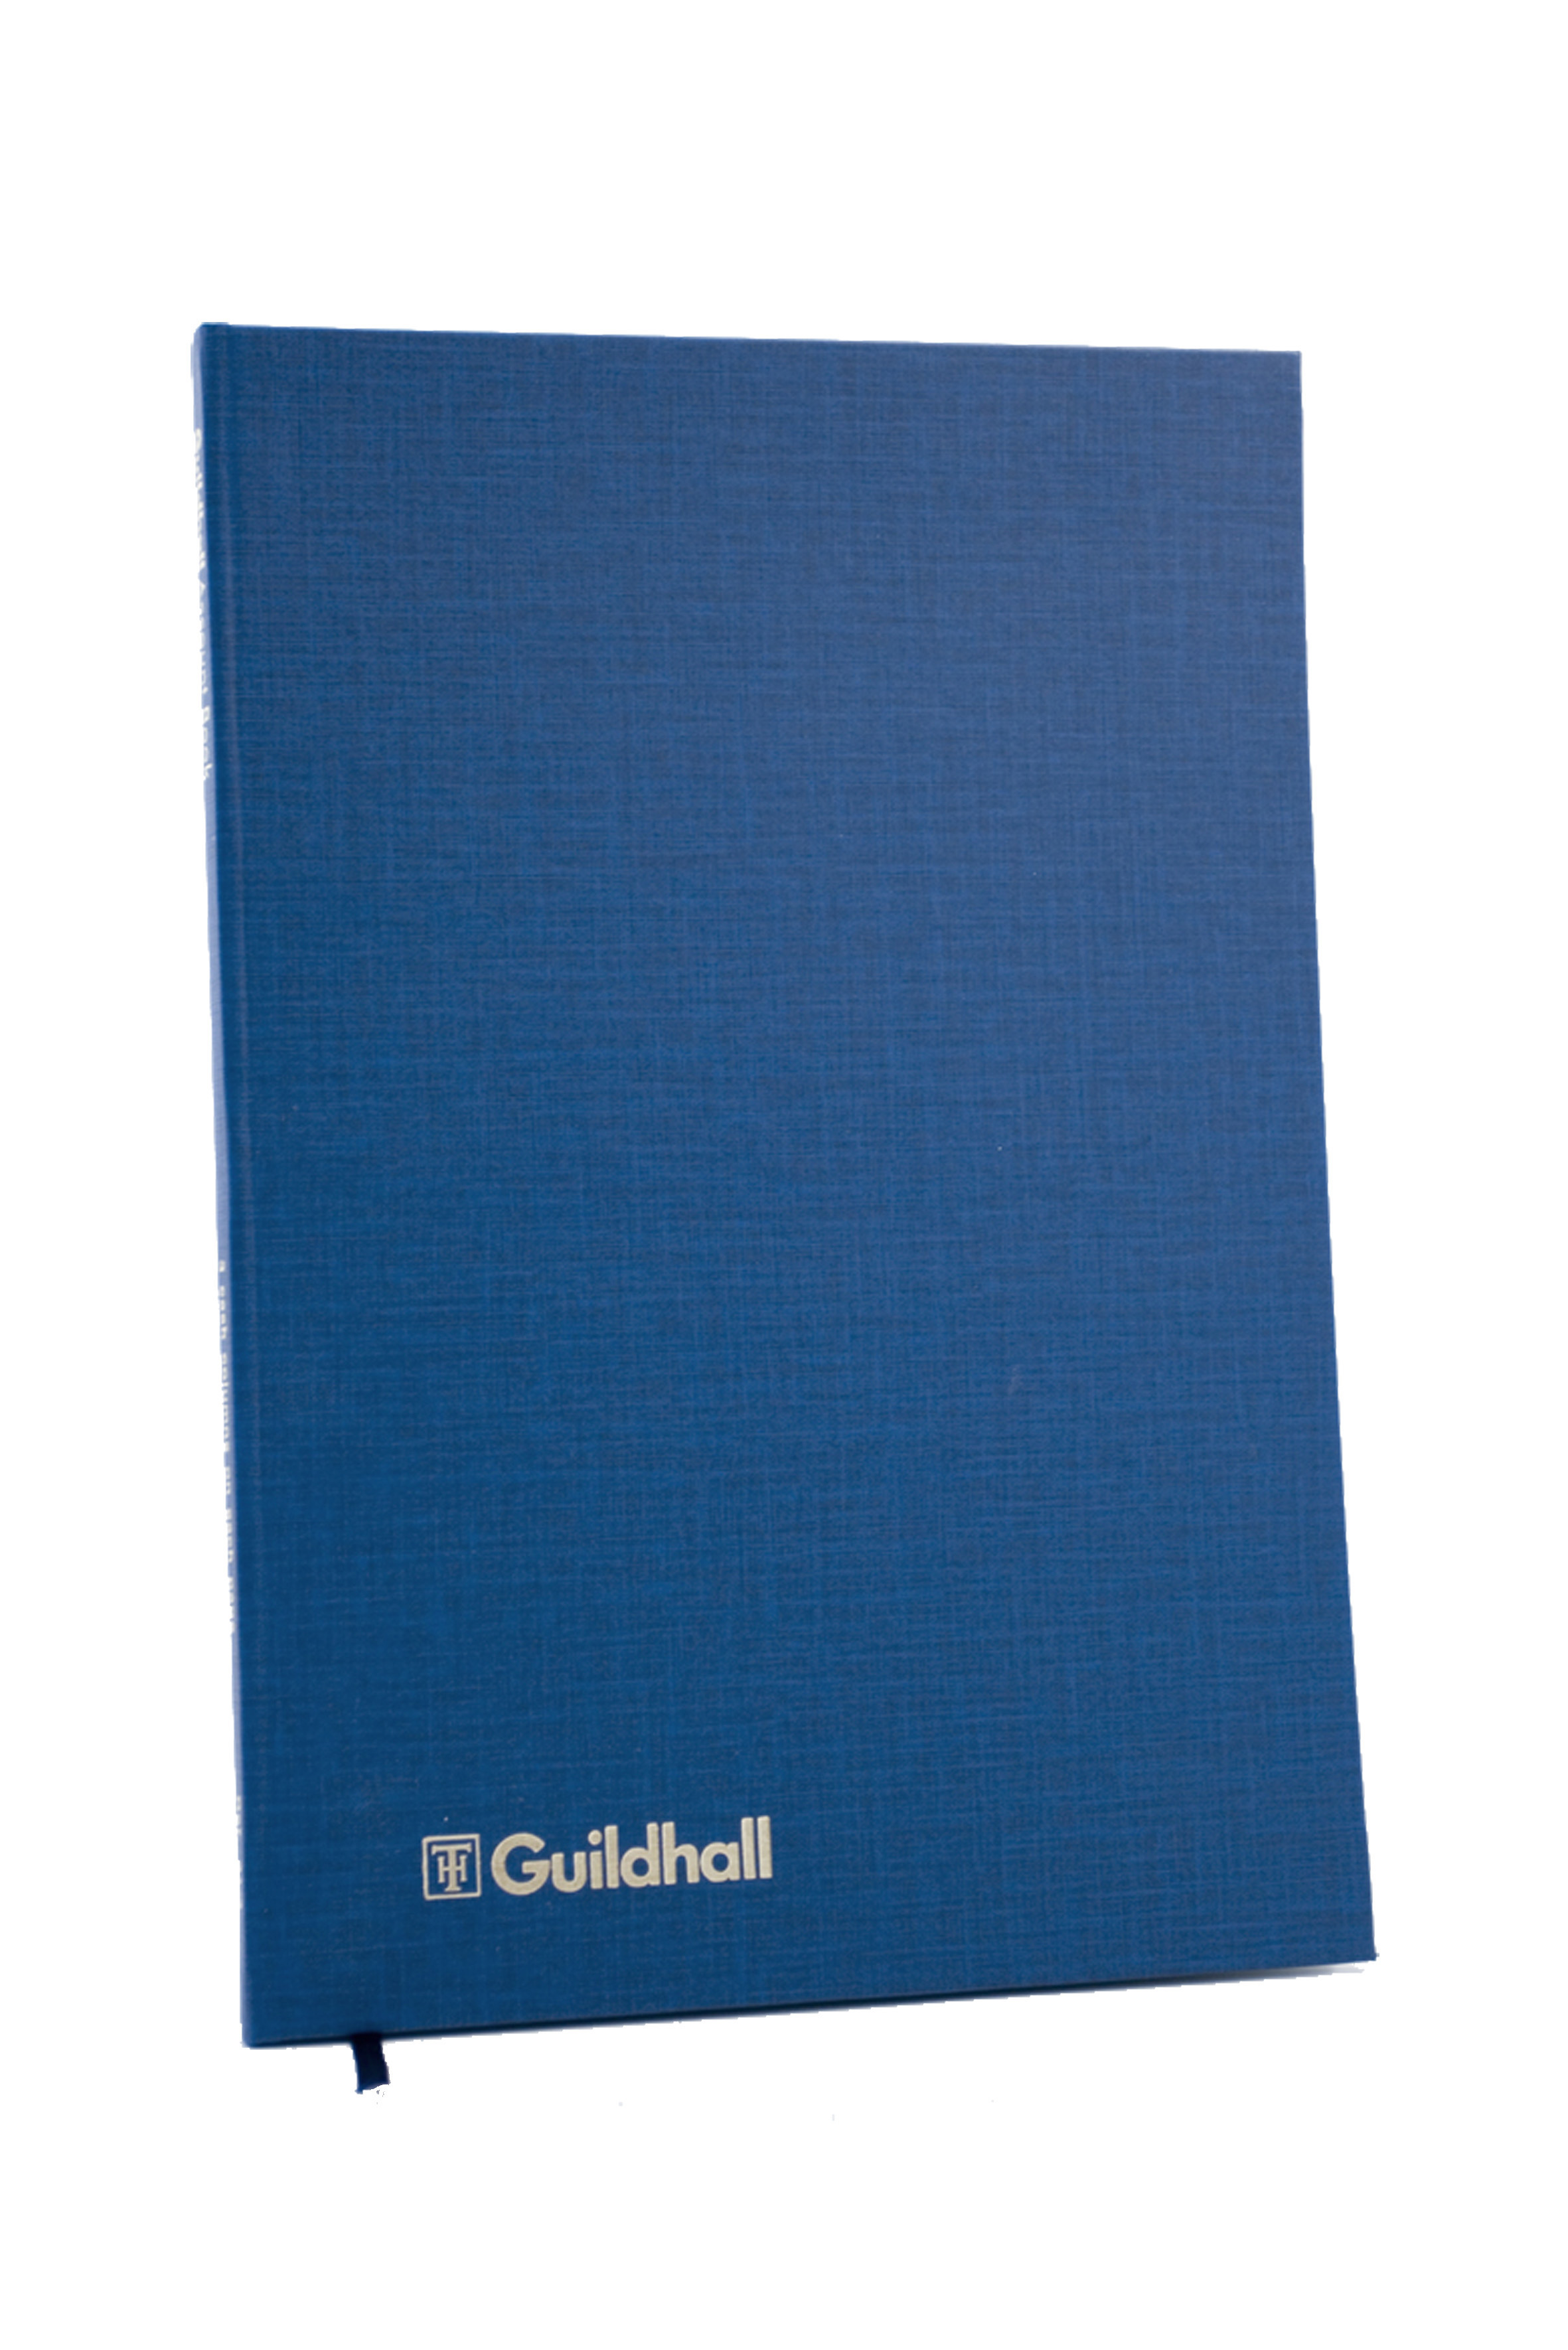 Guildhall Account Book 16 Column 80 Leaf